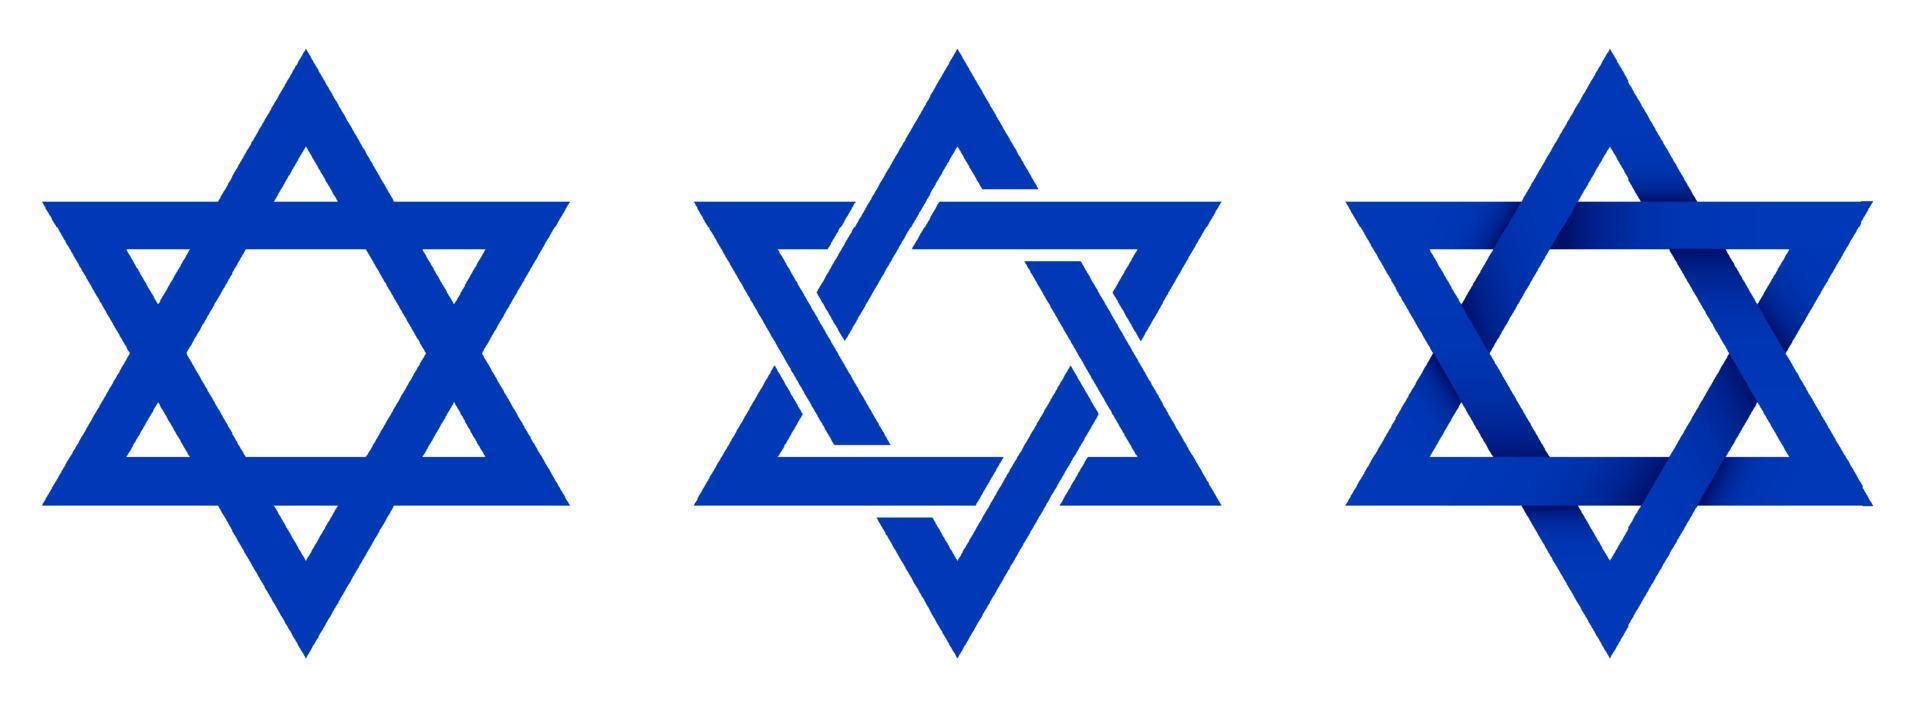 Star of David symbol. Hexagonal star of national flag of Israel. Vector